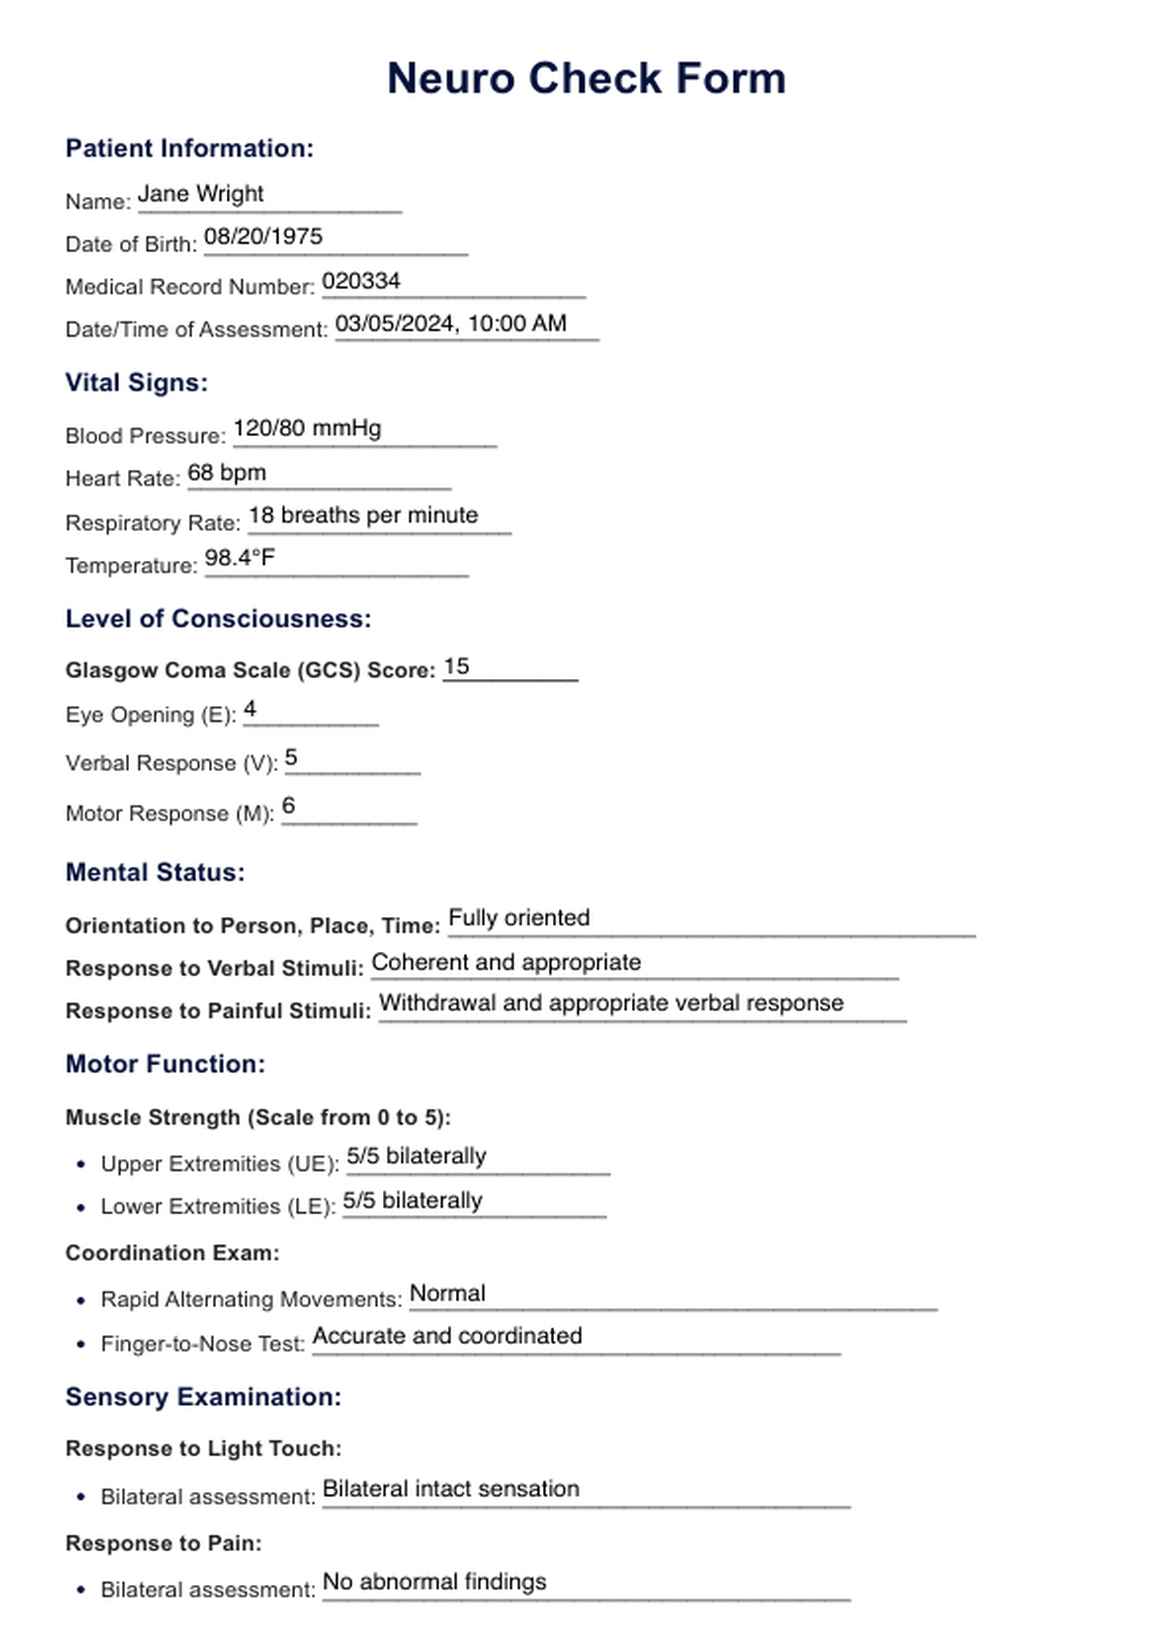 Neuro Check Form PDF Example